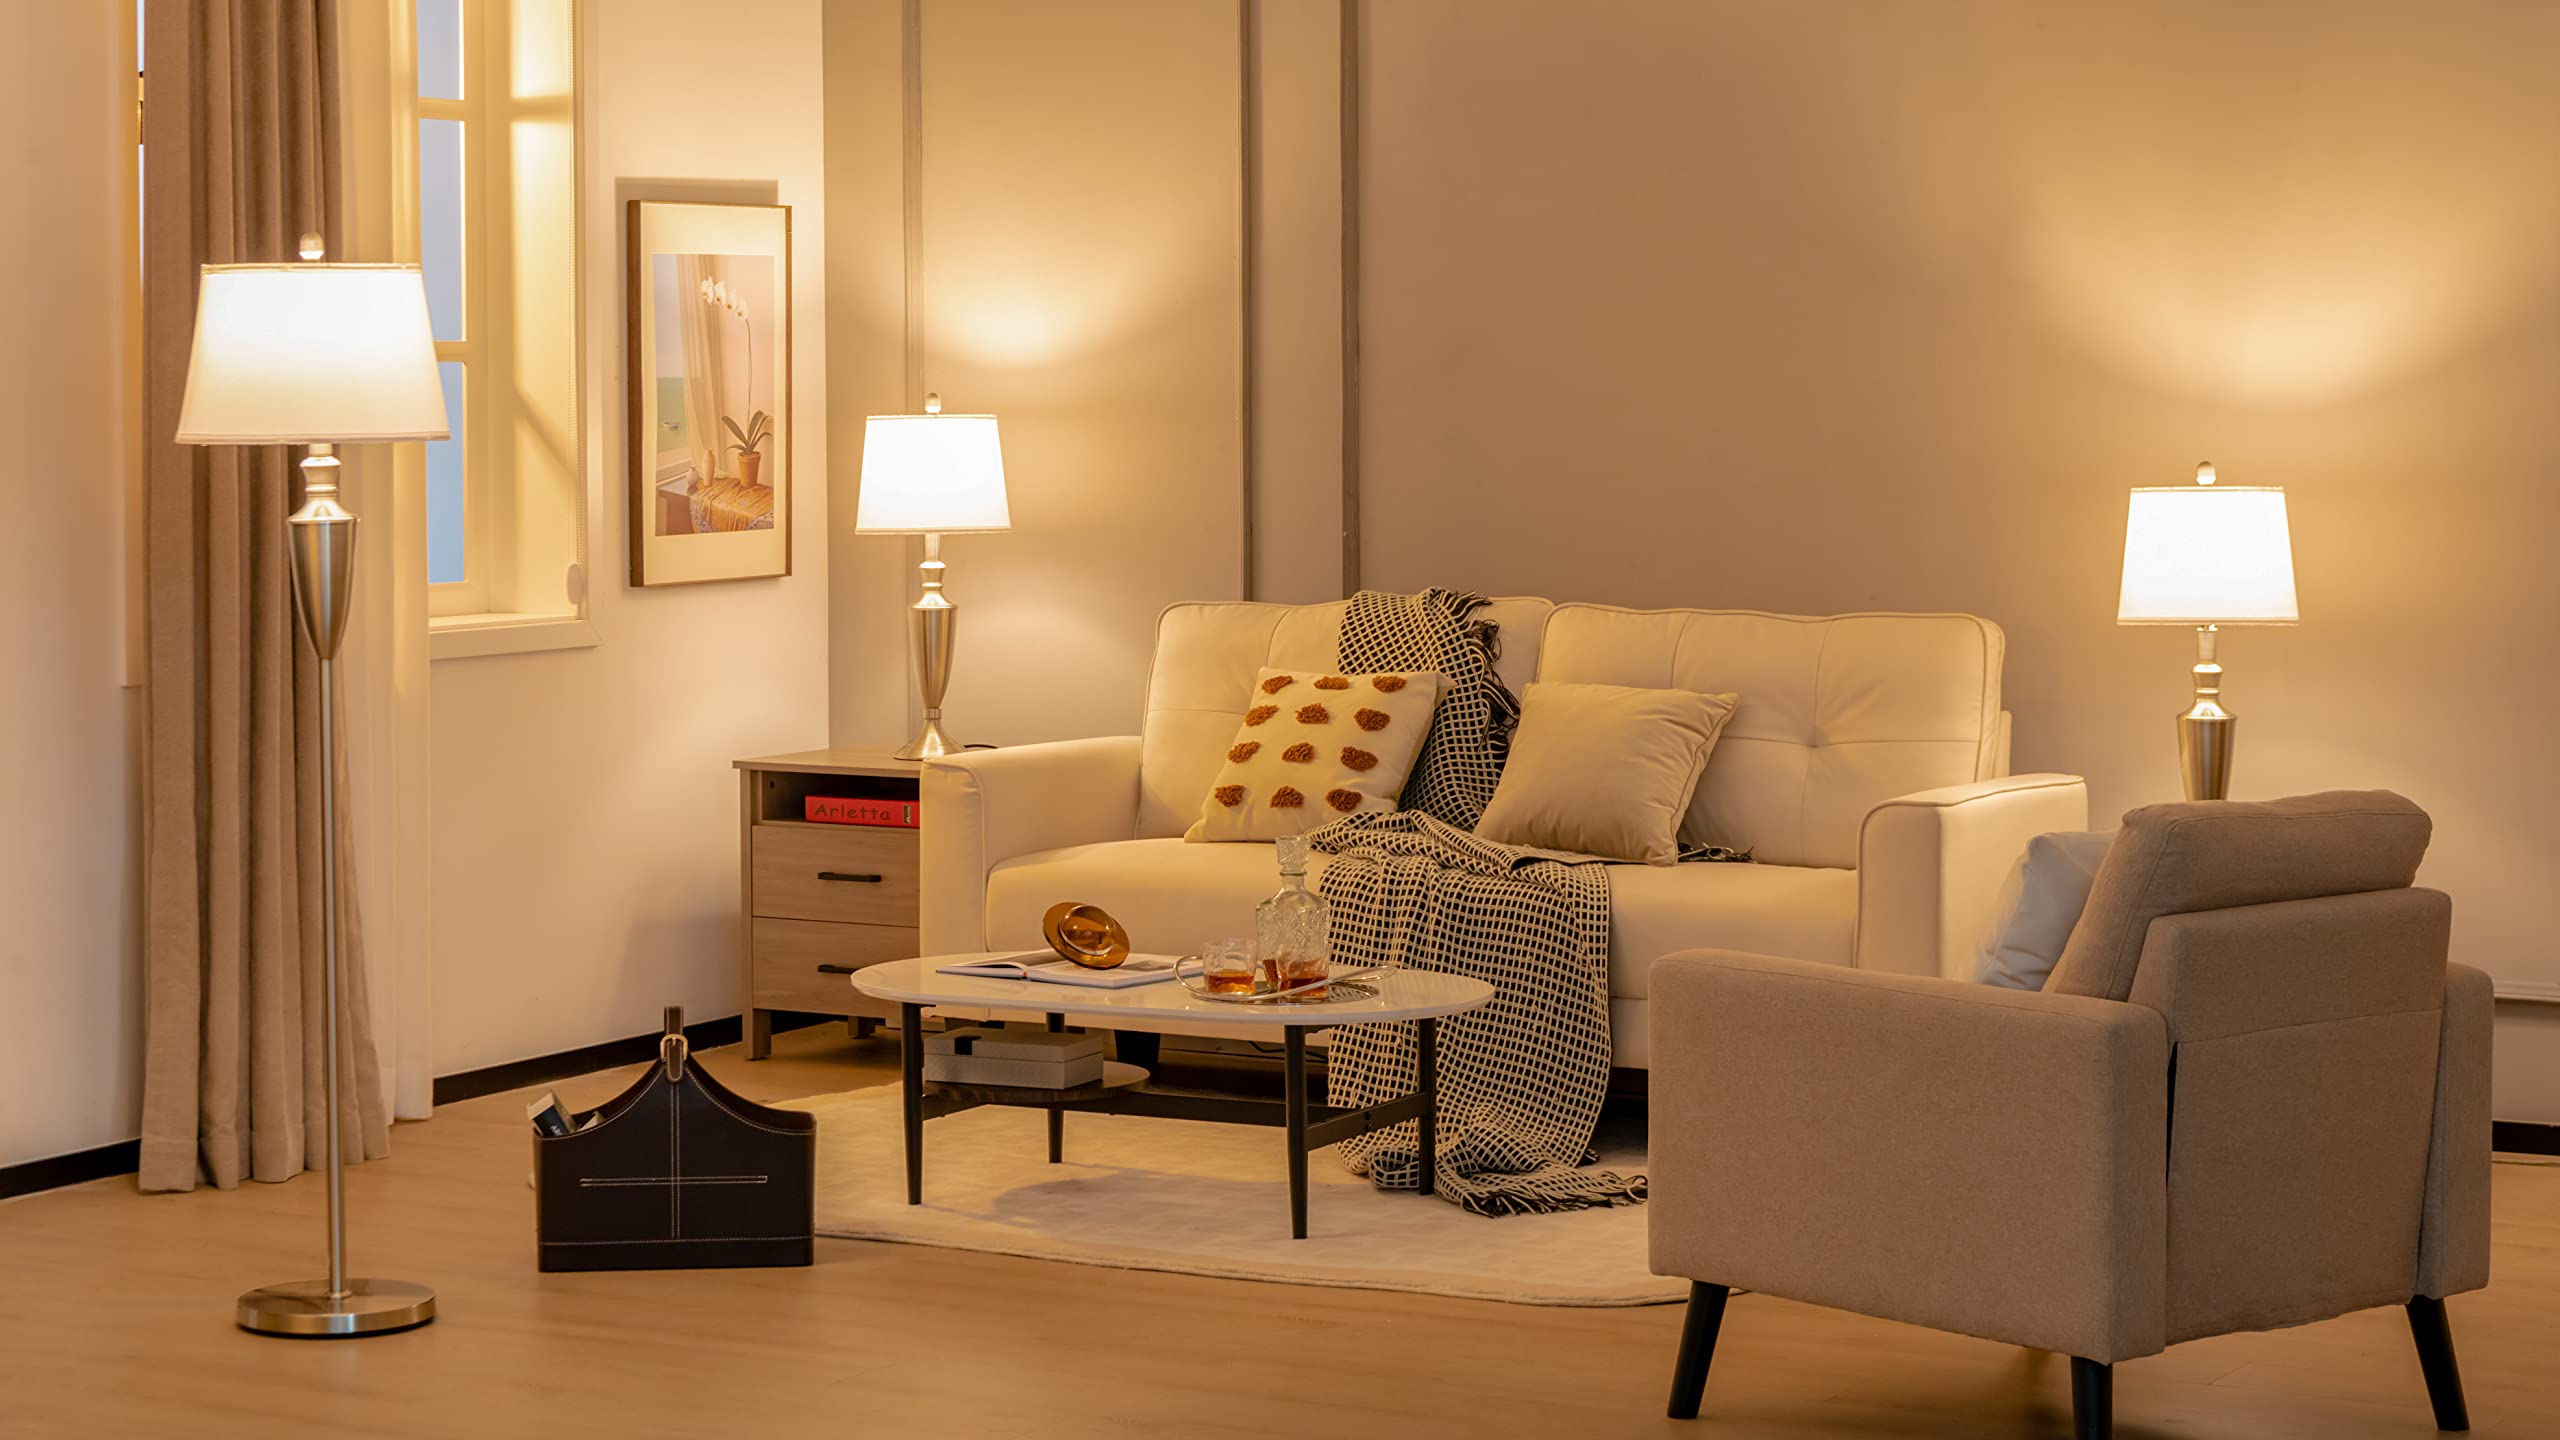 Giantex Couch, 2 Seat Sleeper Sofa, Modern Loveseat for Living Room, 6 Legs(Beige)